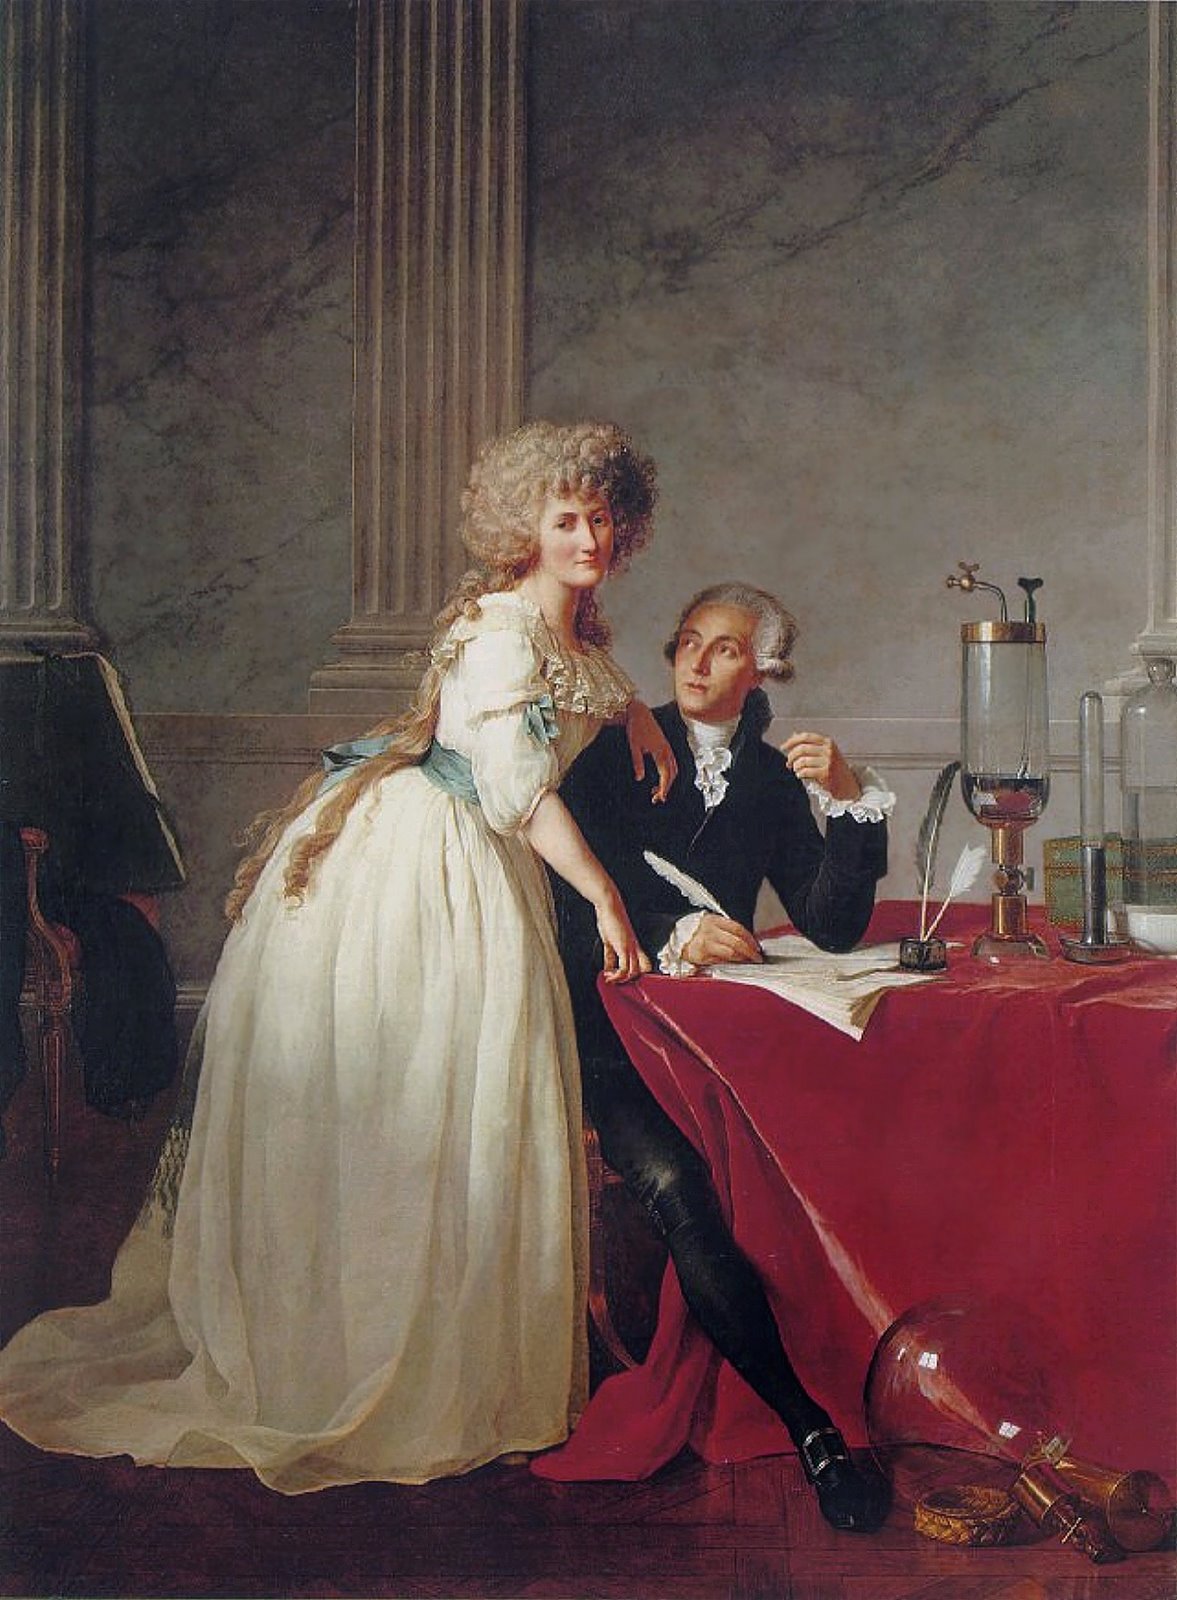 http://4.bp.blogspot.com/-dpI9IwyRp3c/TWq0V52Az3I/AAAAAAAAArM/QQIVXg-7BbU/s1600/David_-_Portrait_of_Monsieur_Lavoisier_and_His_Wife.jpg